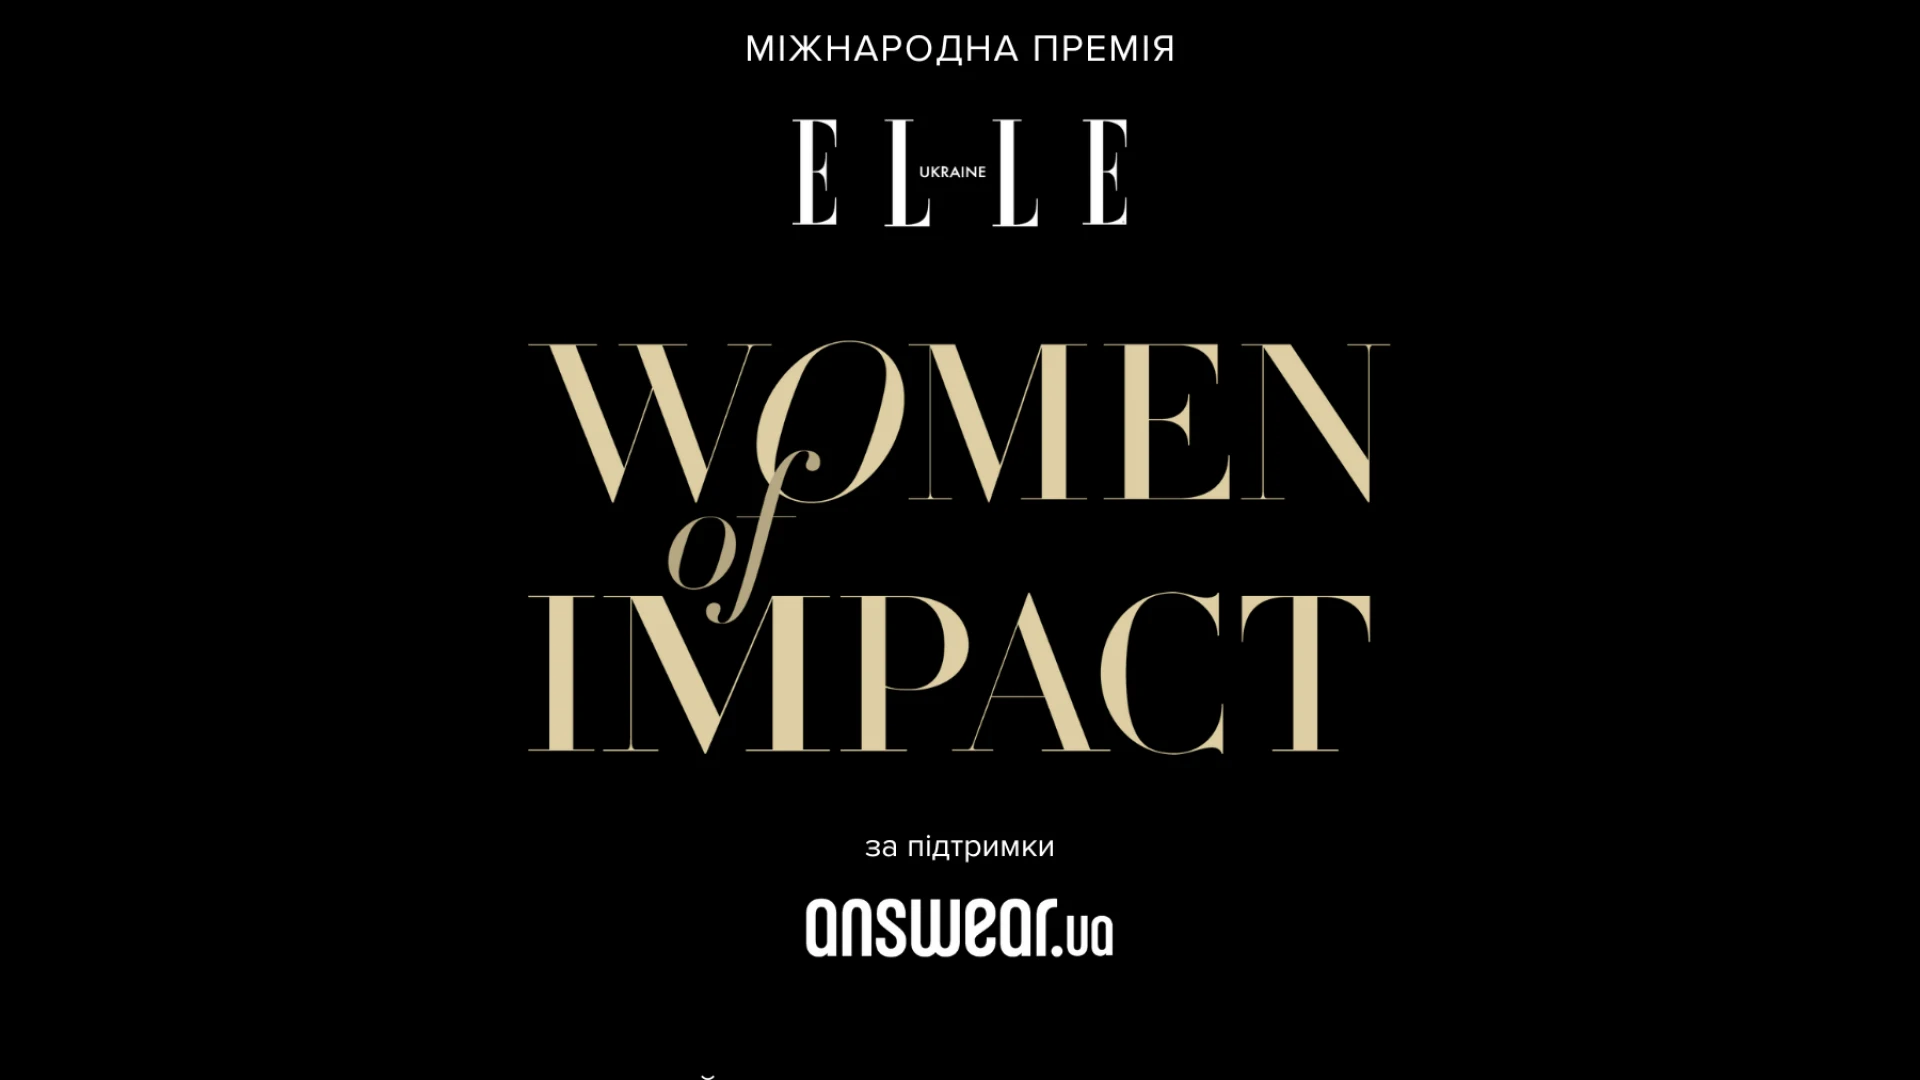 ELLE Україна презентує Міжнародну премію Women of Impact